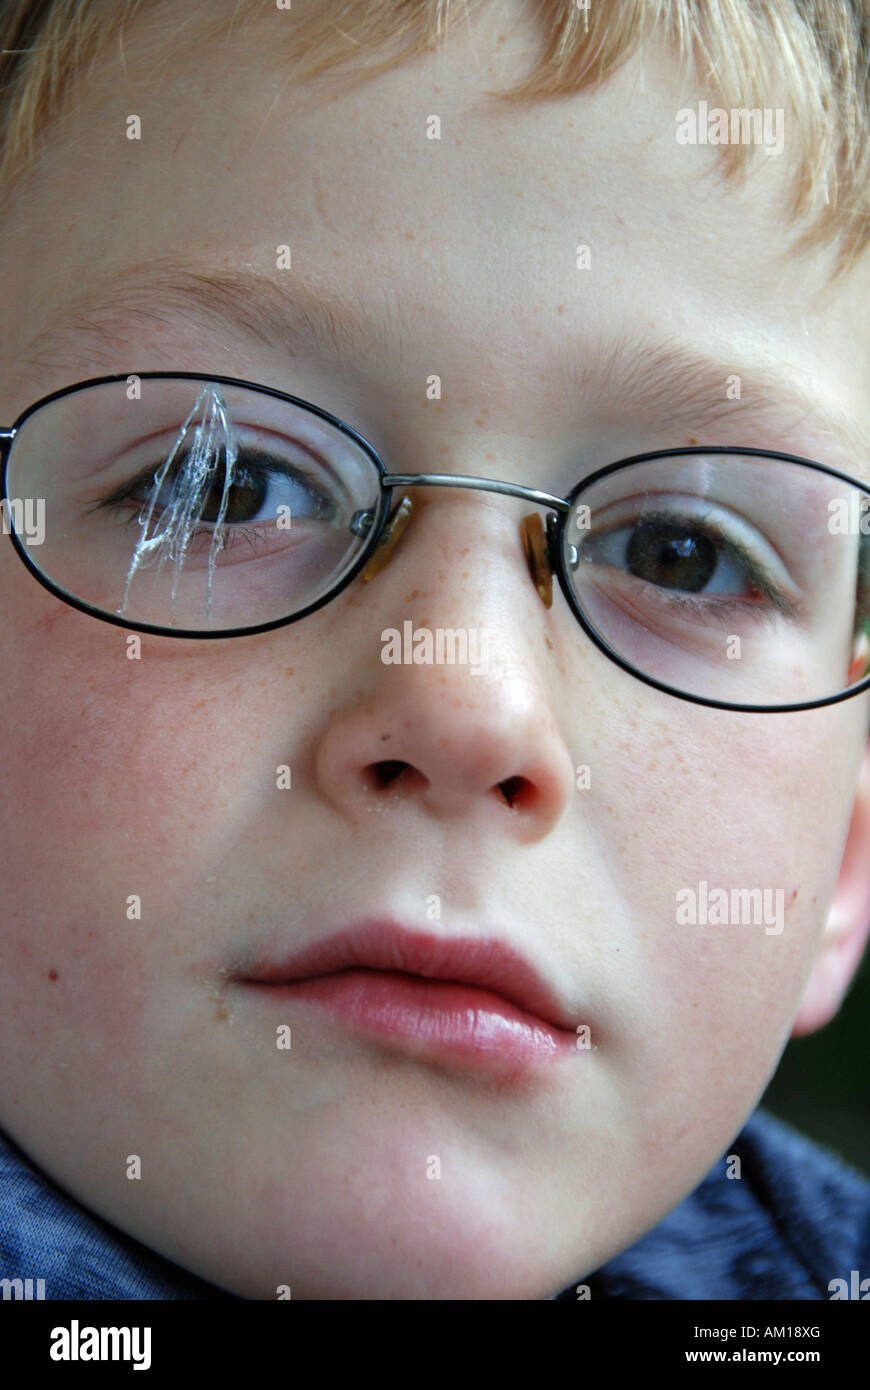 Boy with broken glasses Stock Photo